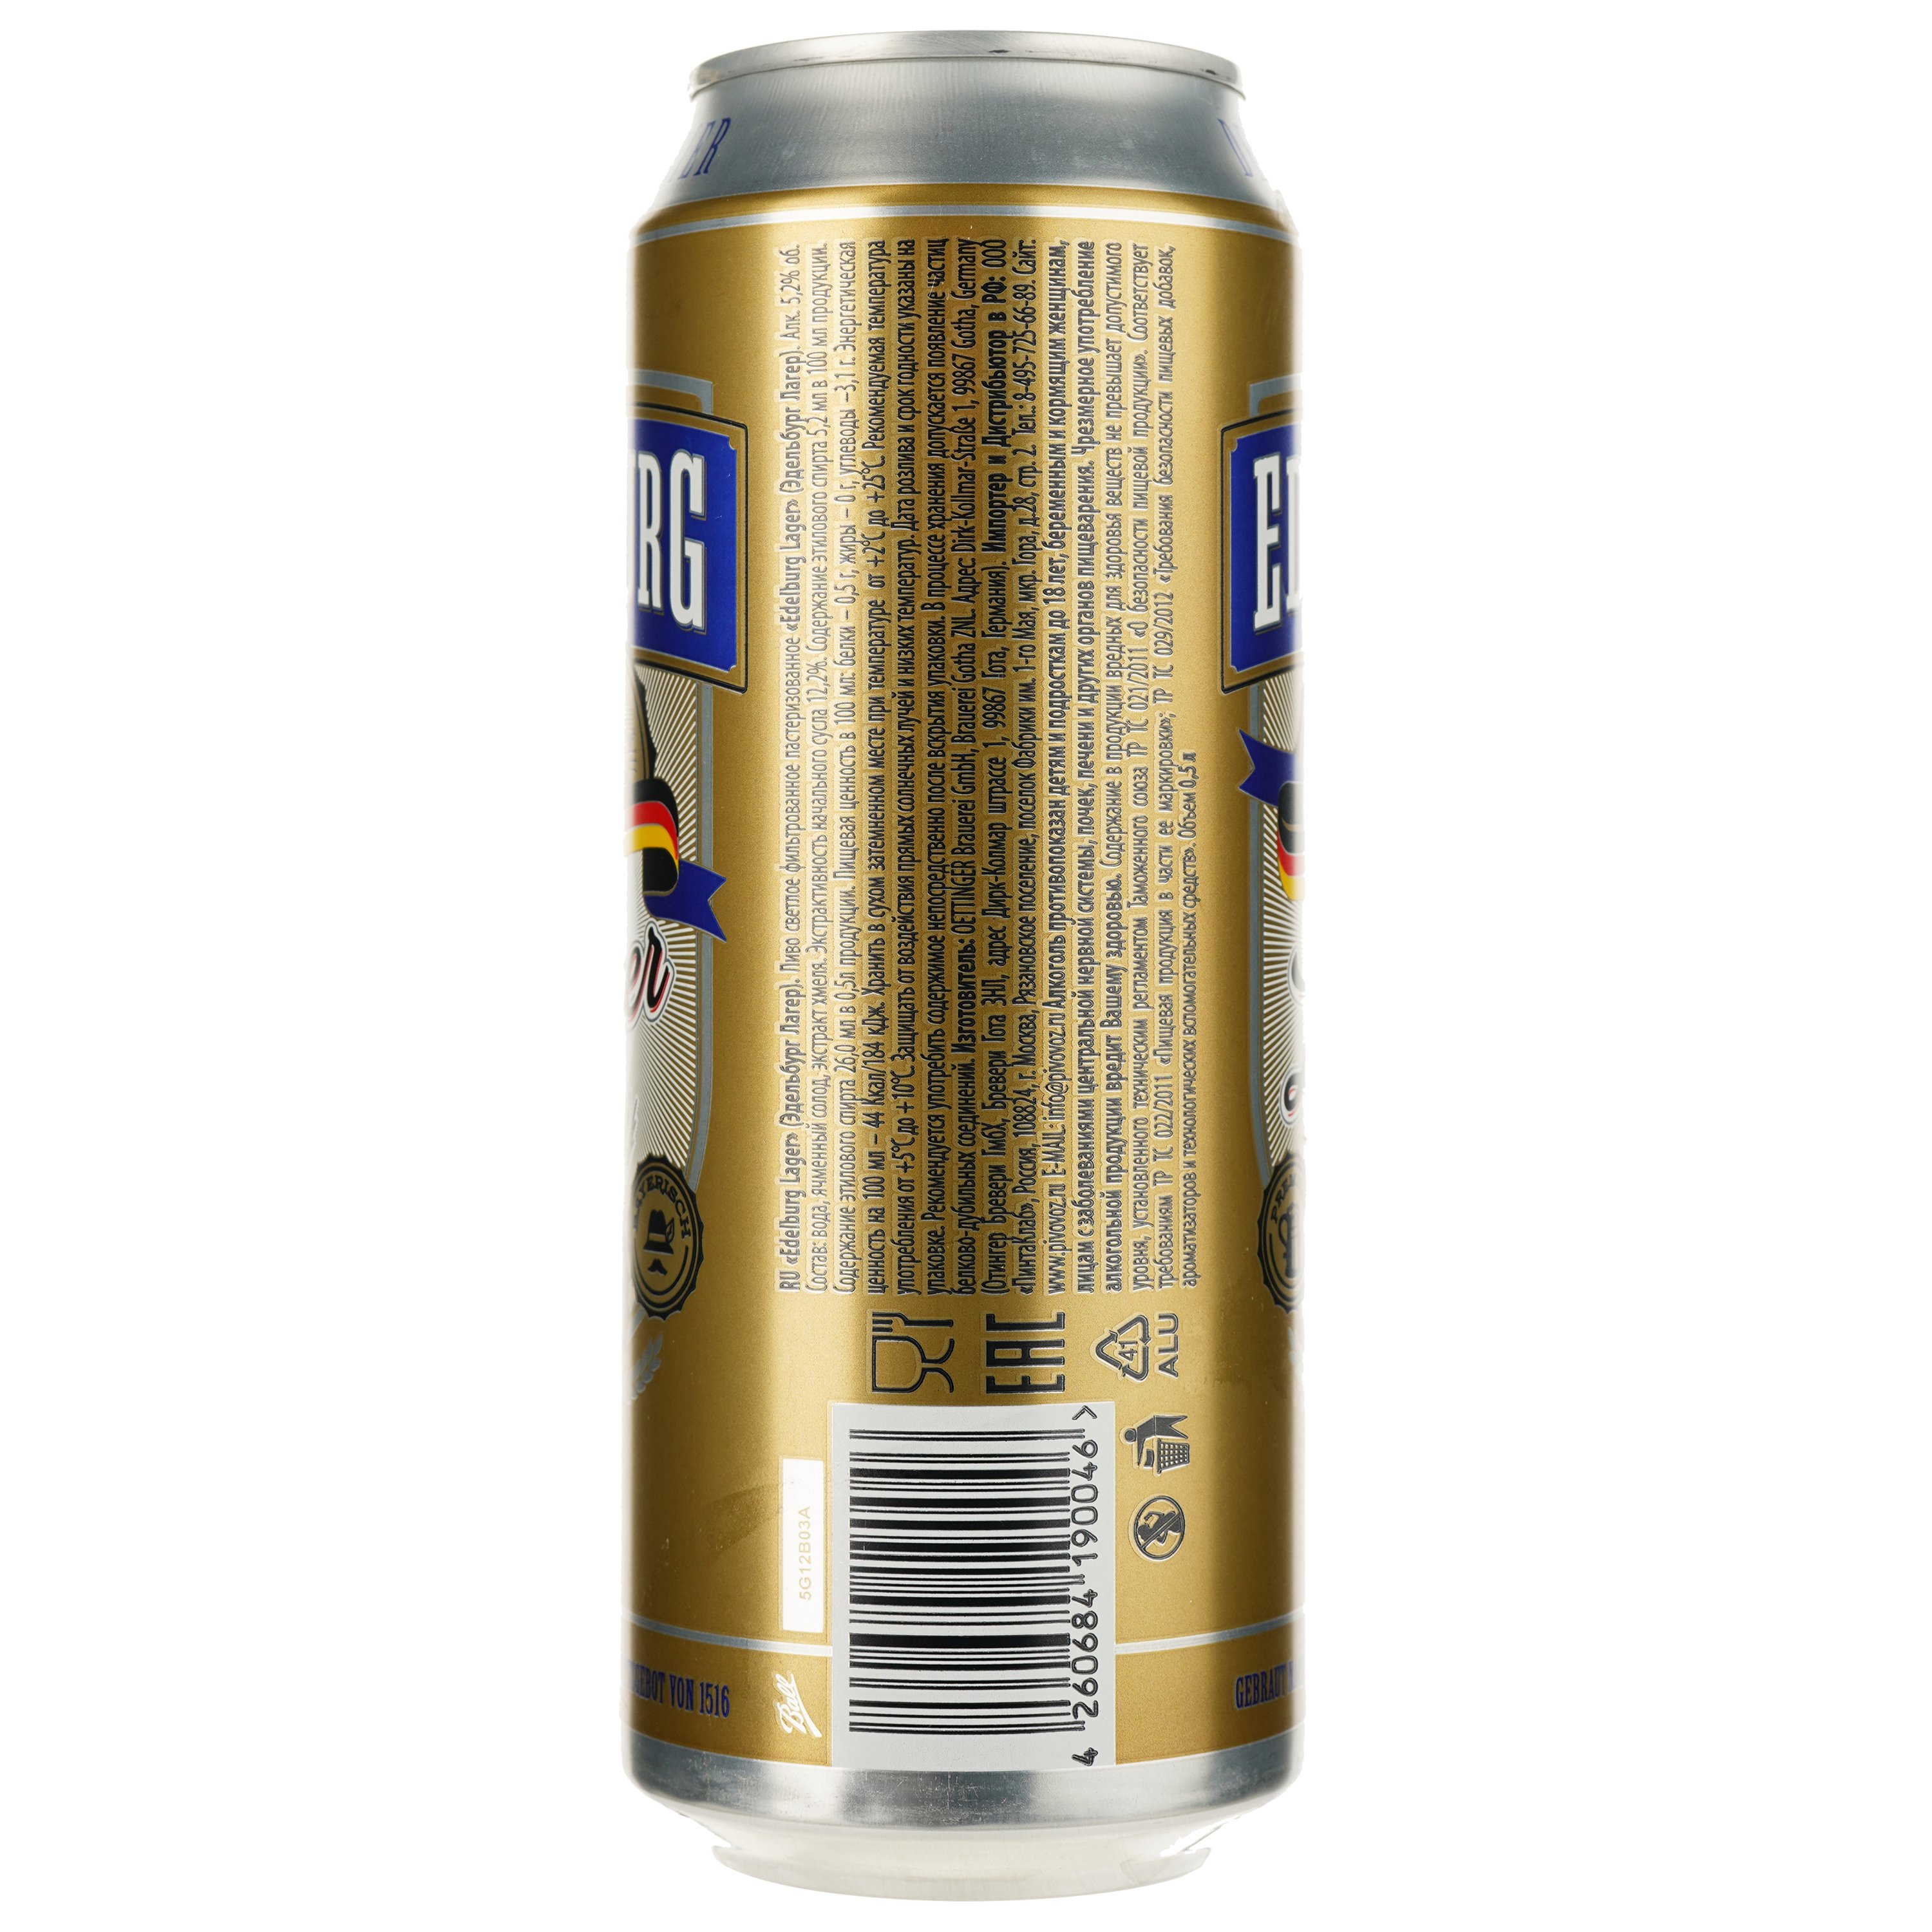 Пиво Edelburg Lager світле 5.2% 0.5 л з/б - фото 2